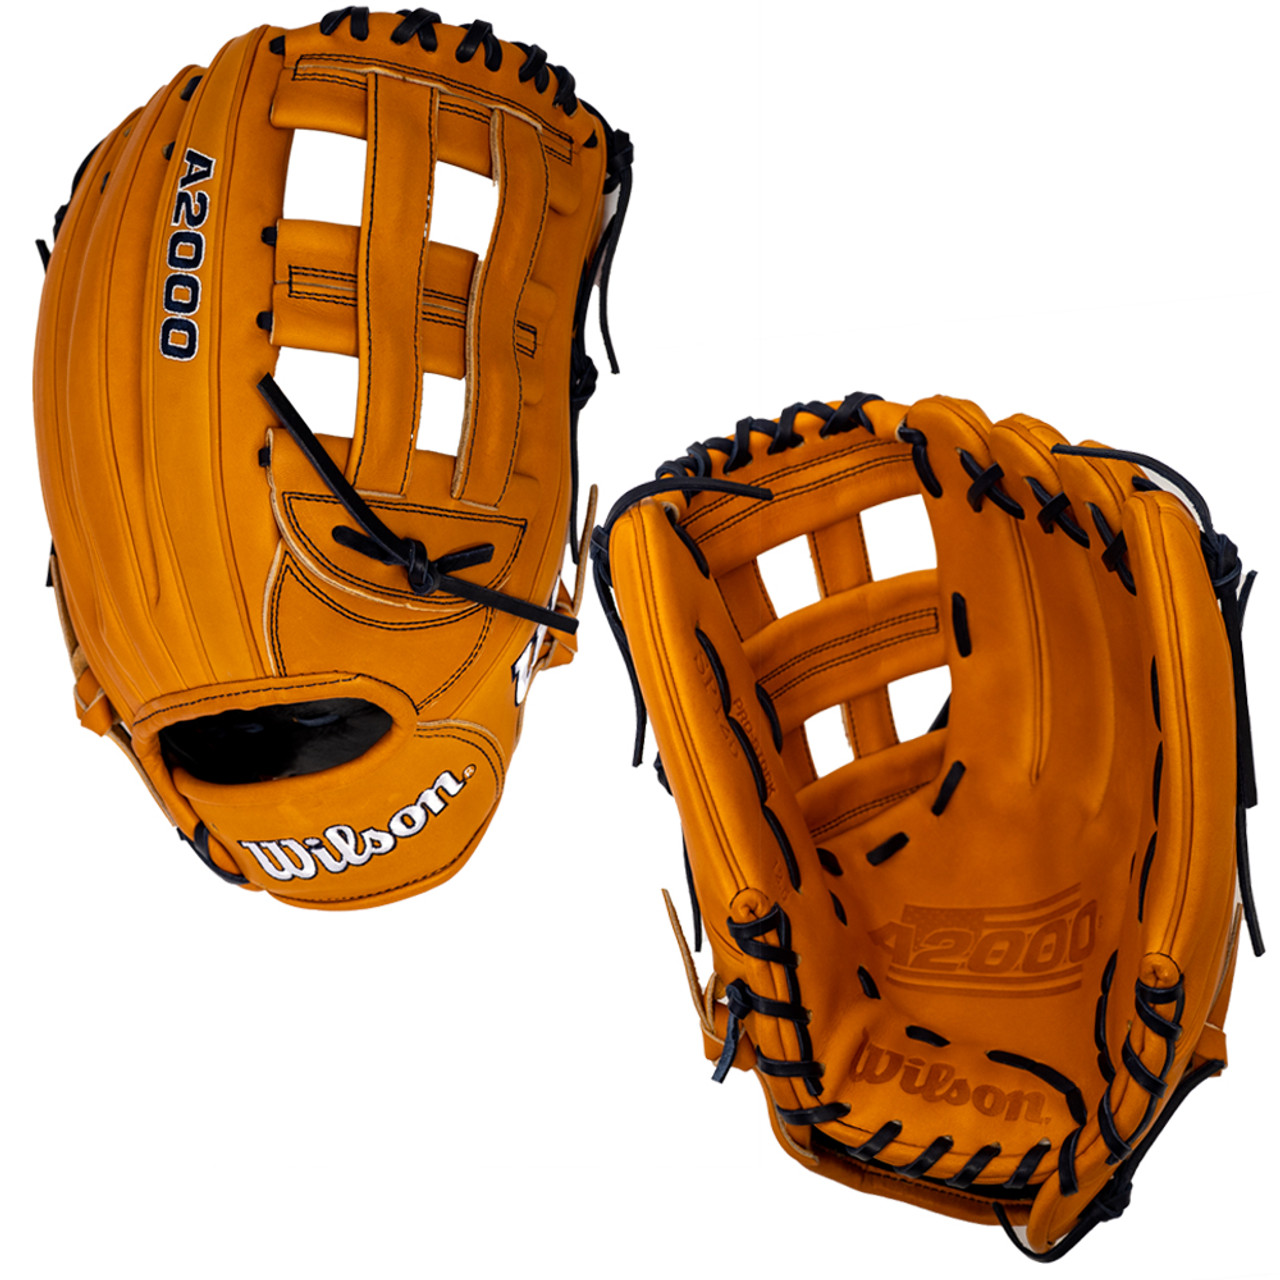 G-Form Baseball/Softball Batting Gloves - Black - Adult Small(1 Pair)